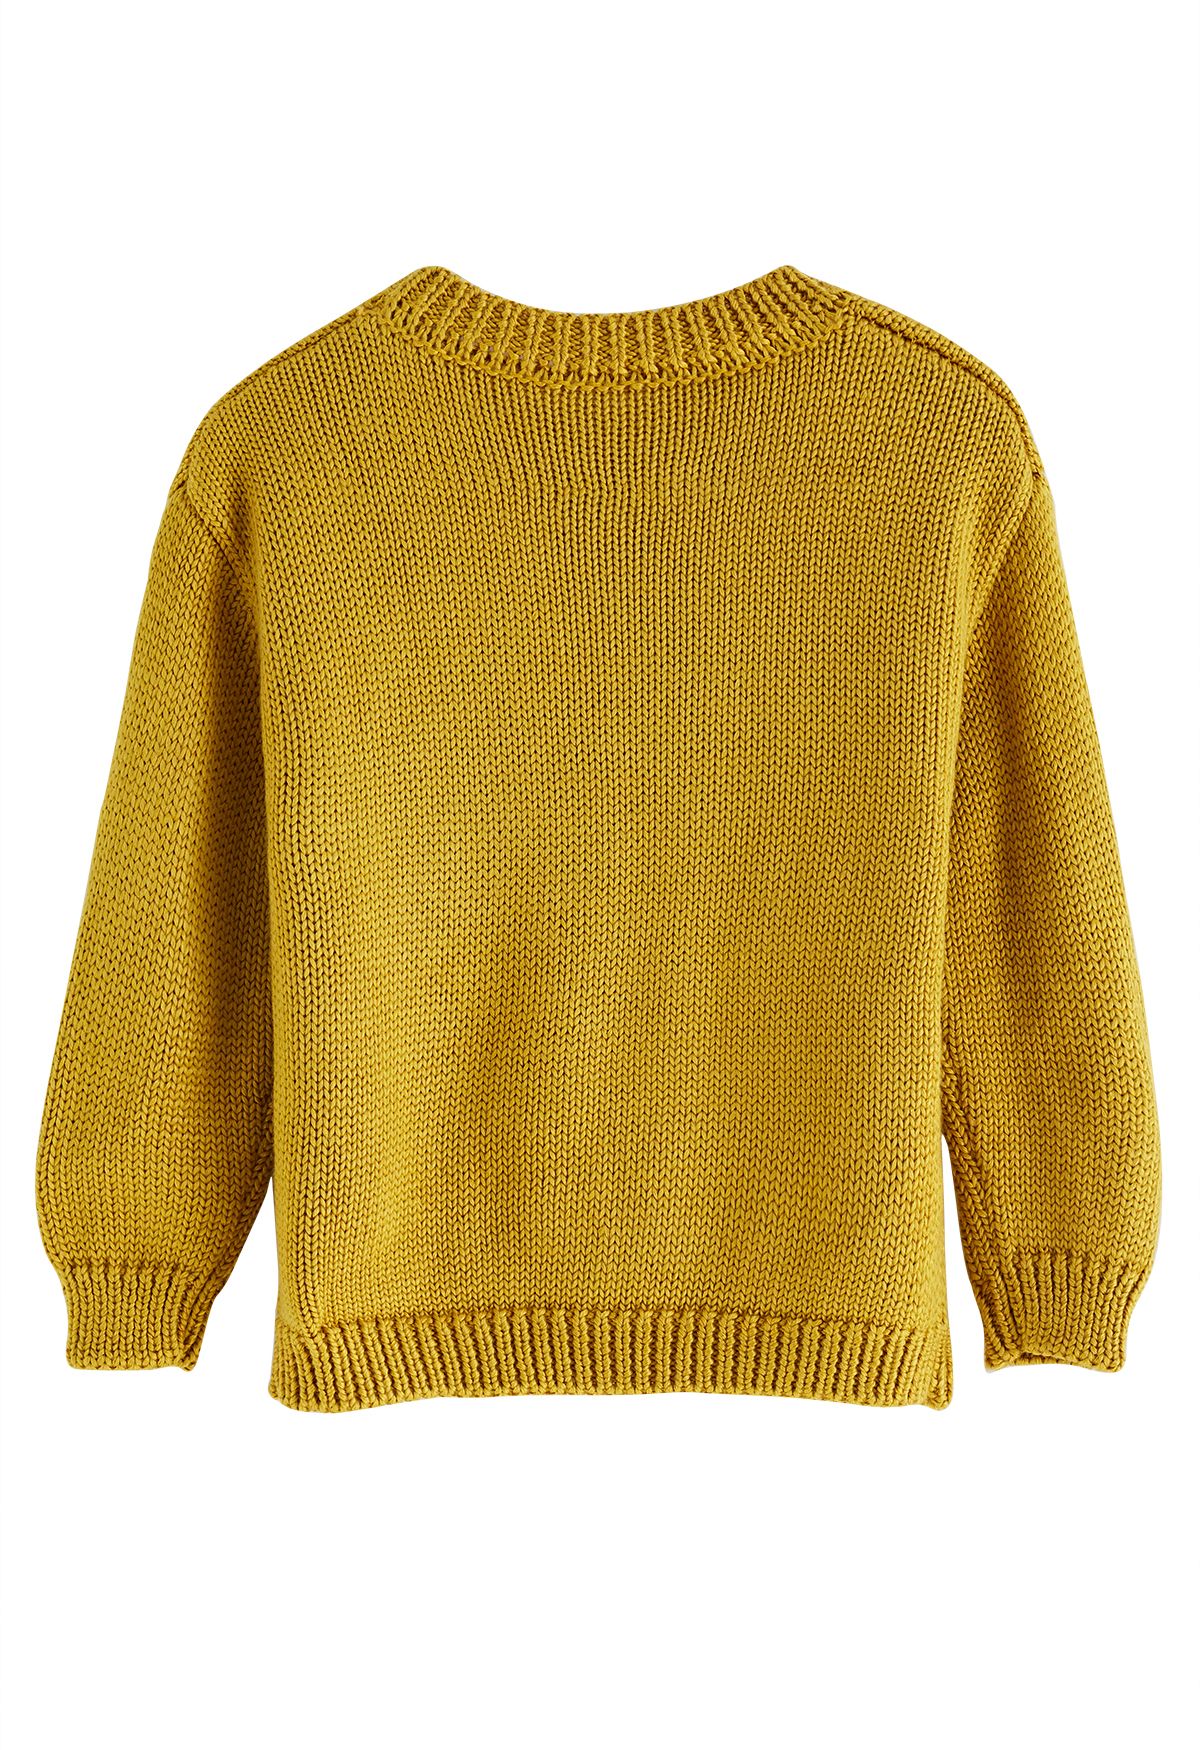 Pom-Pom Hand-Knit Sweater in Mustard For Kids